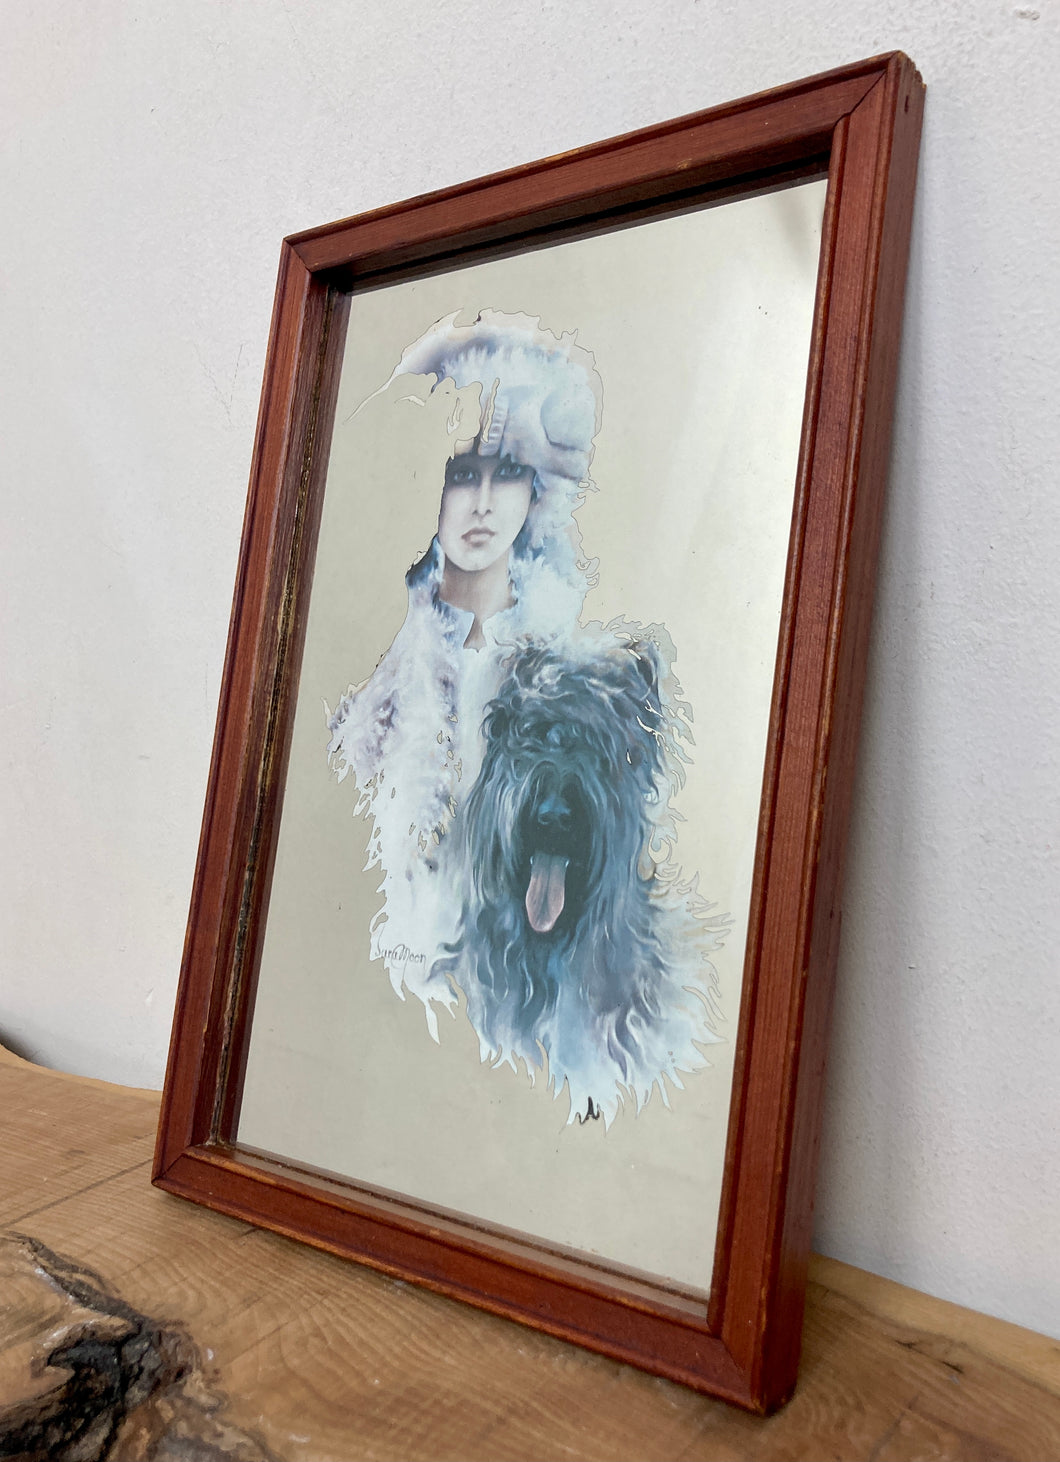 Stunning vintage art nouveau mirror Sara moon collectibles wall art piece